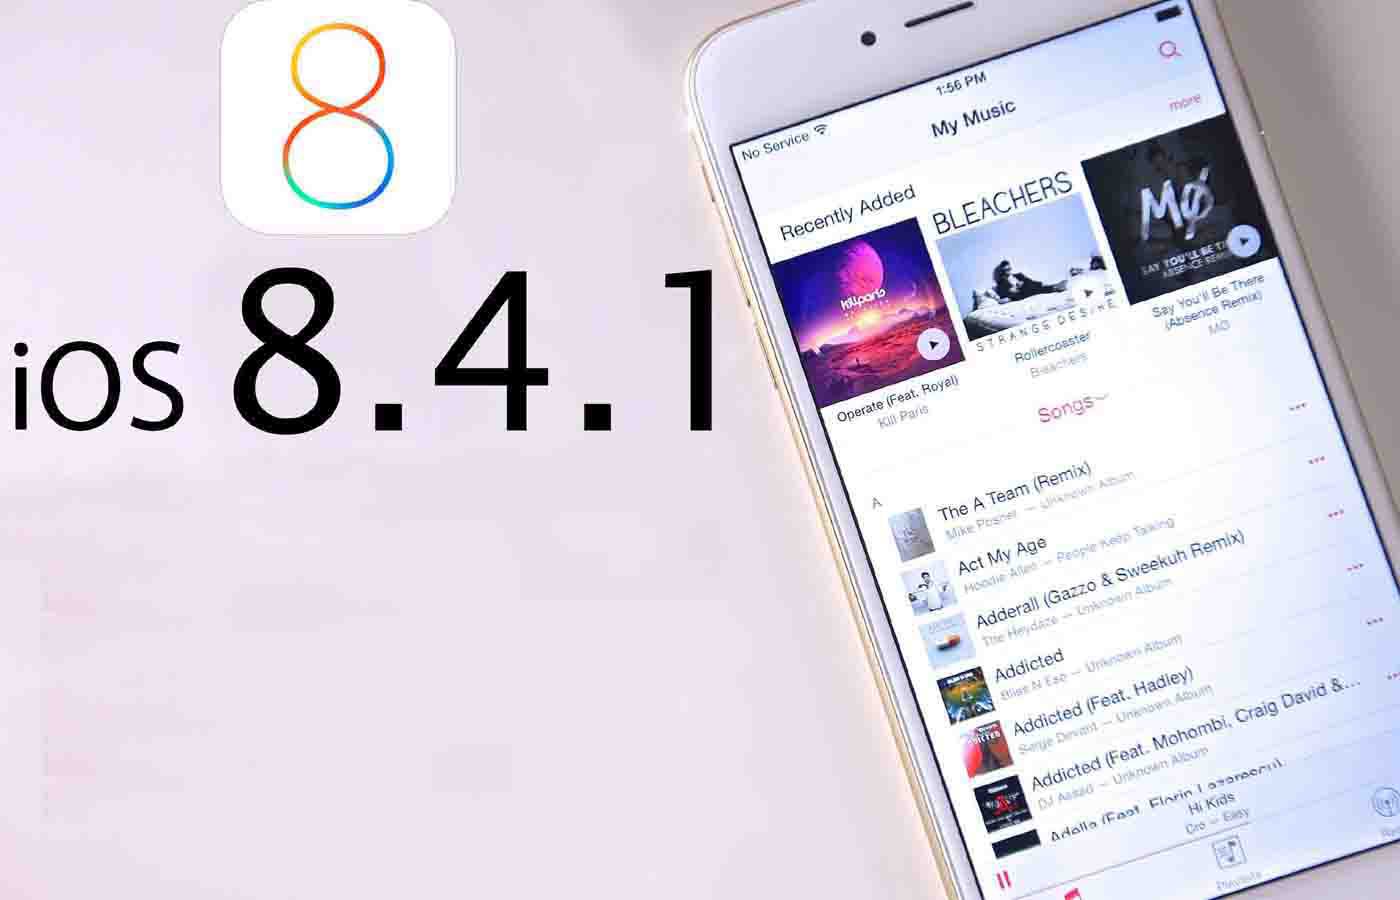 Jailbreak iOS 8.4.1 will be released soon